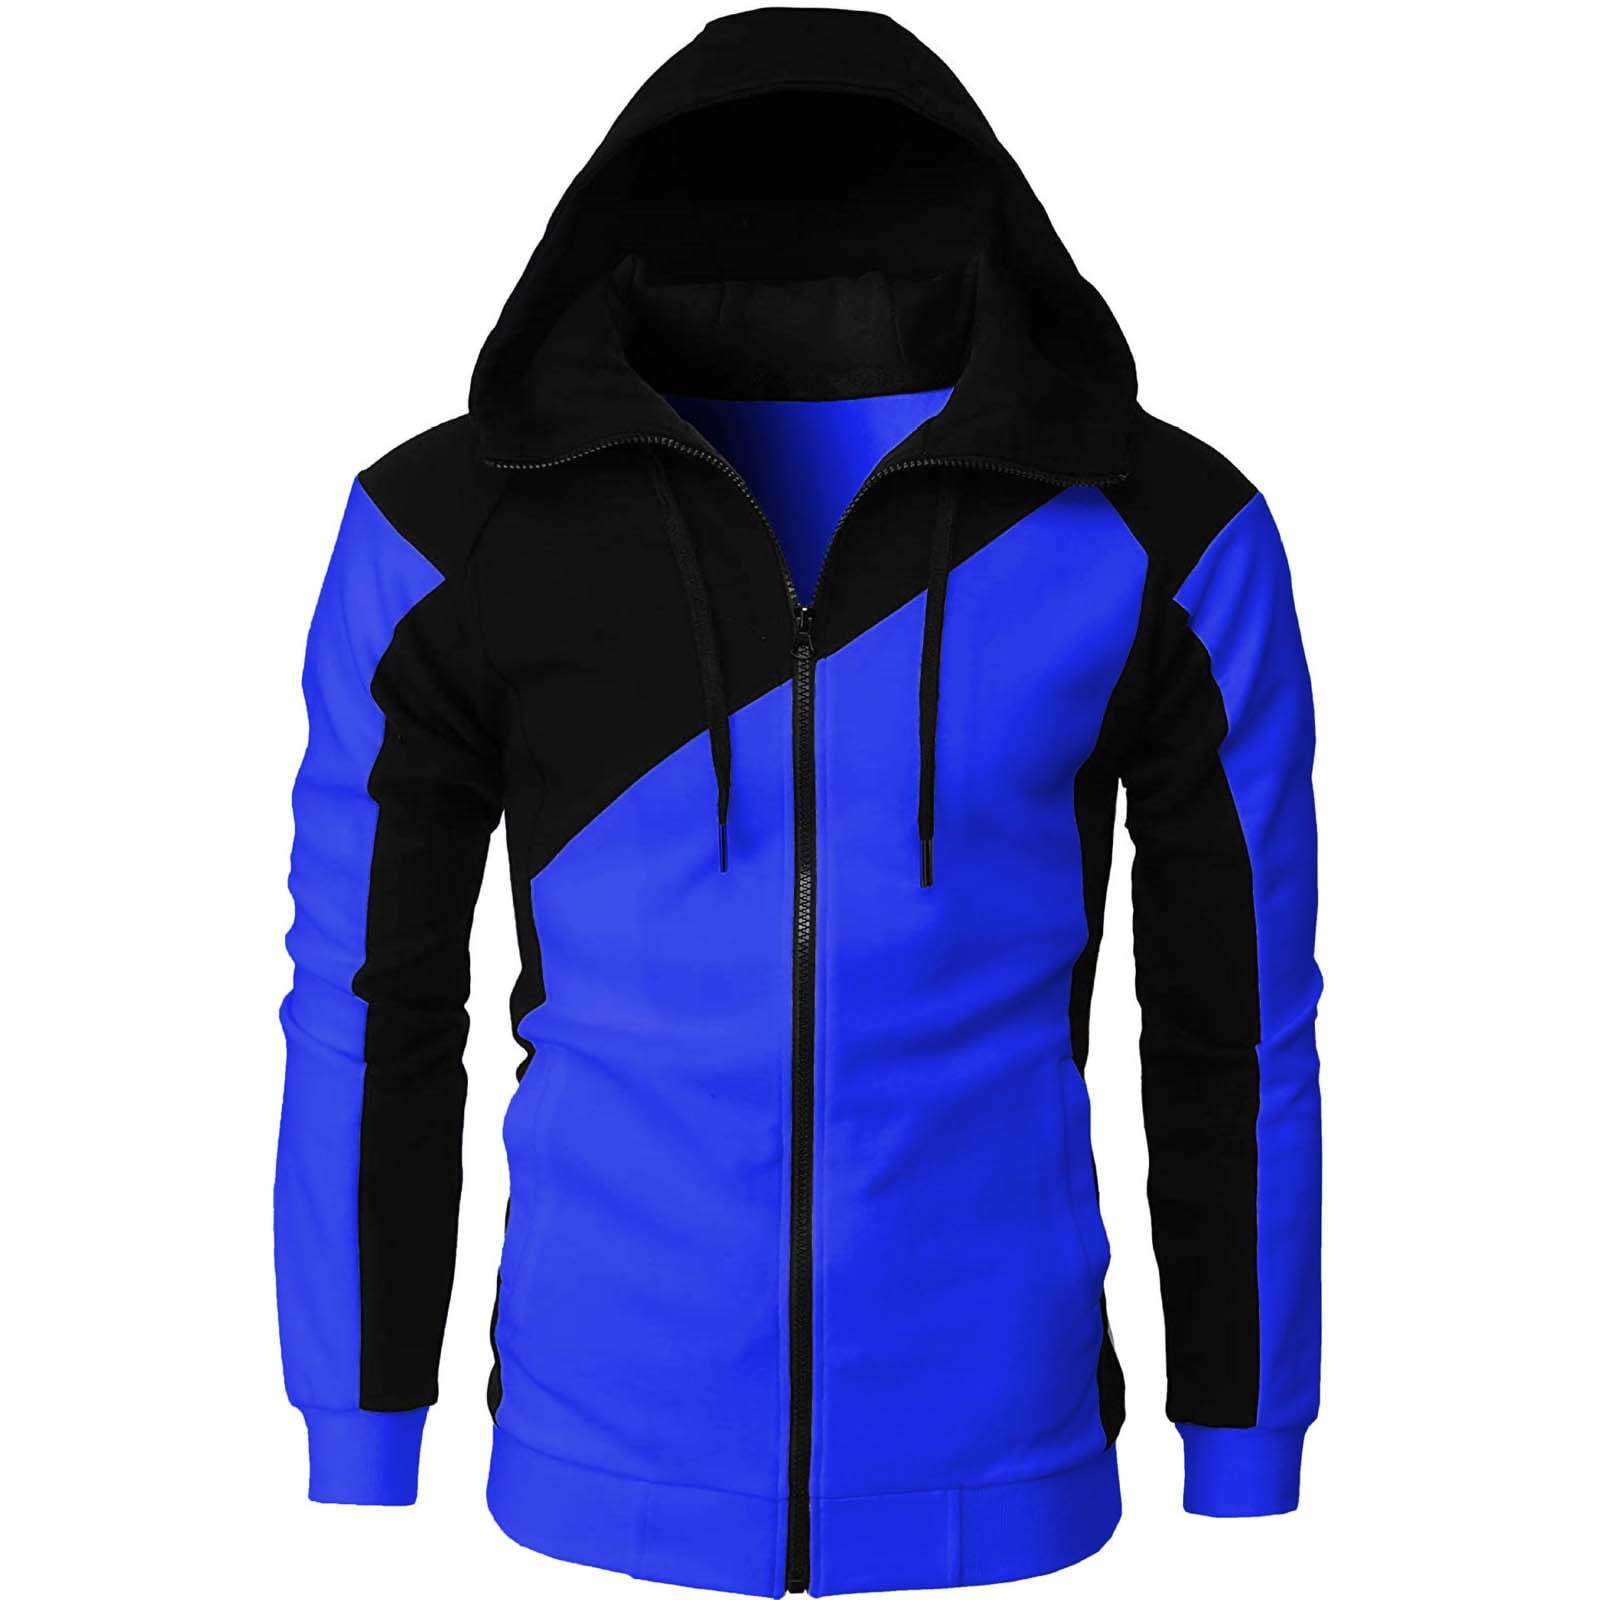 Hfyihgf Men's Jacket Color Block Full Zip Hoodie Long Sleeve Slim Fit  Lightweight Gym Sports Hooded Sweatshirt Coat with Pocket(Black,XL) 